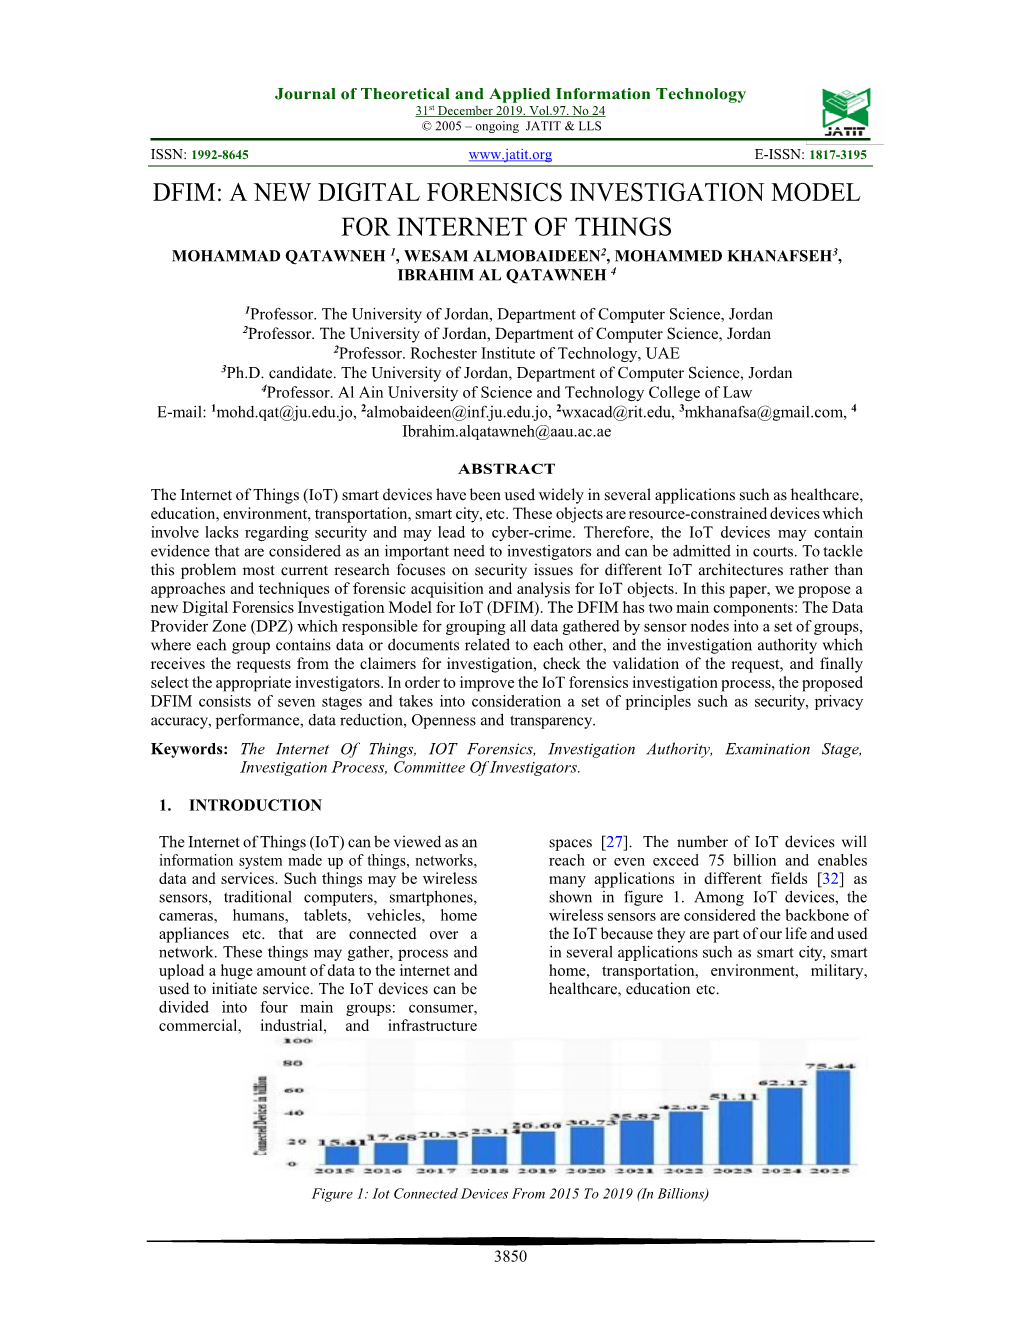 Dfim: a New Digital Forensics Investigation Model for Internet of Things Mohammad Qatawneh 1, Wesam Almobaideen2, Mohammed Khanafseh3, Ibrahim Al Qatawneh 4